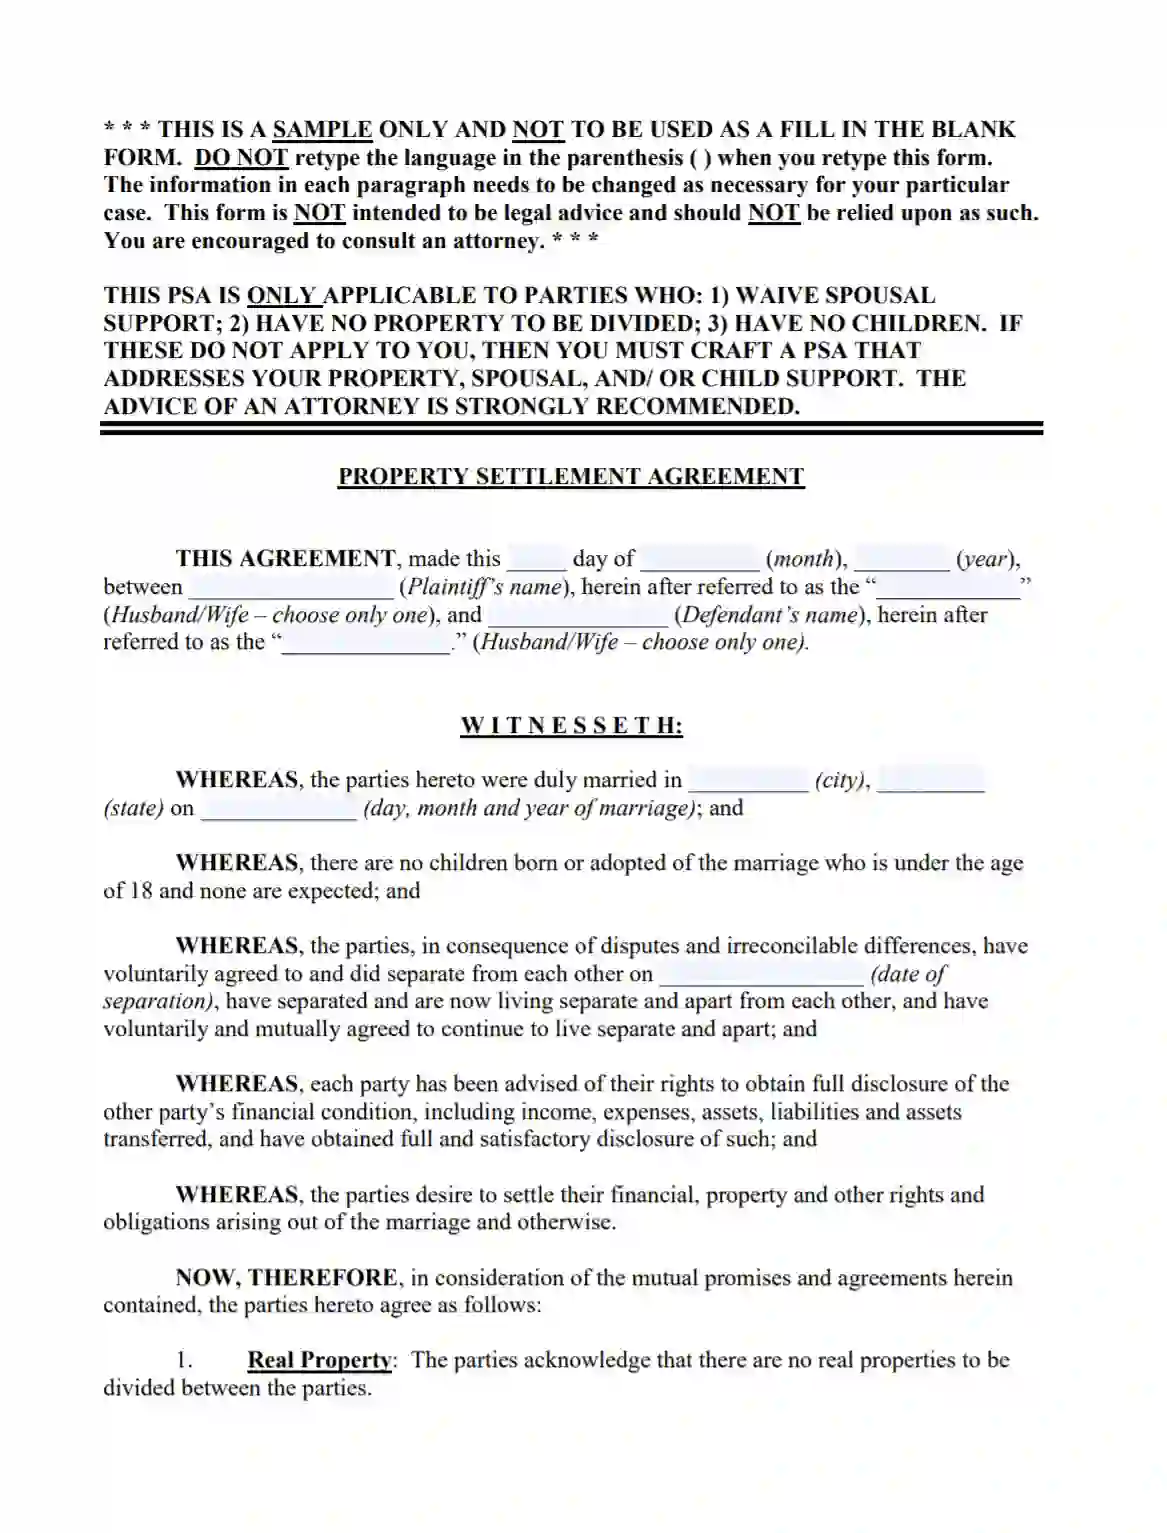 virginia marital settlement agreement